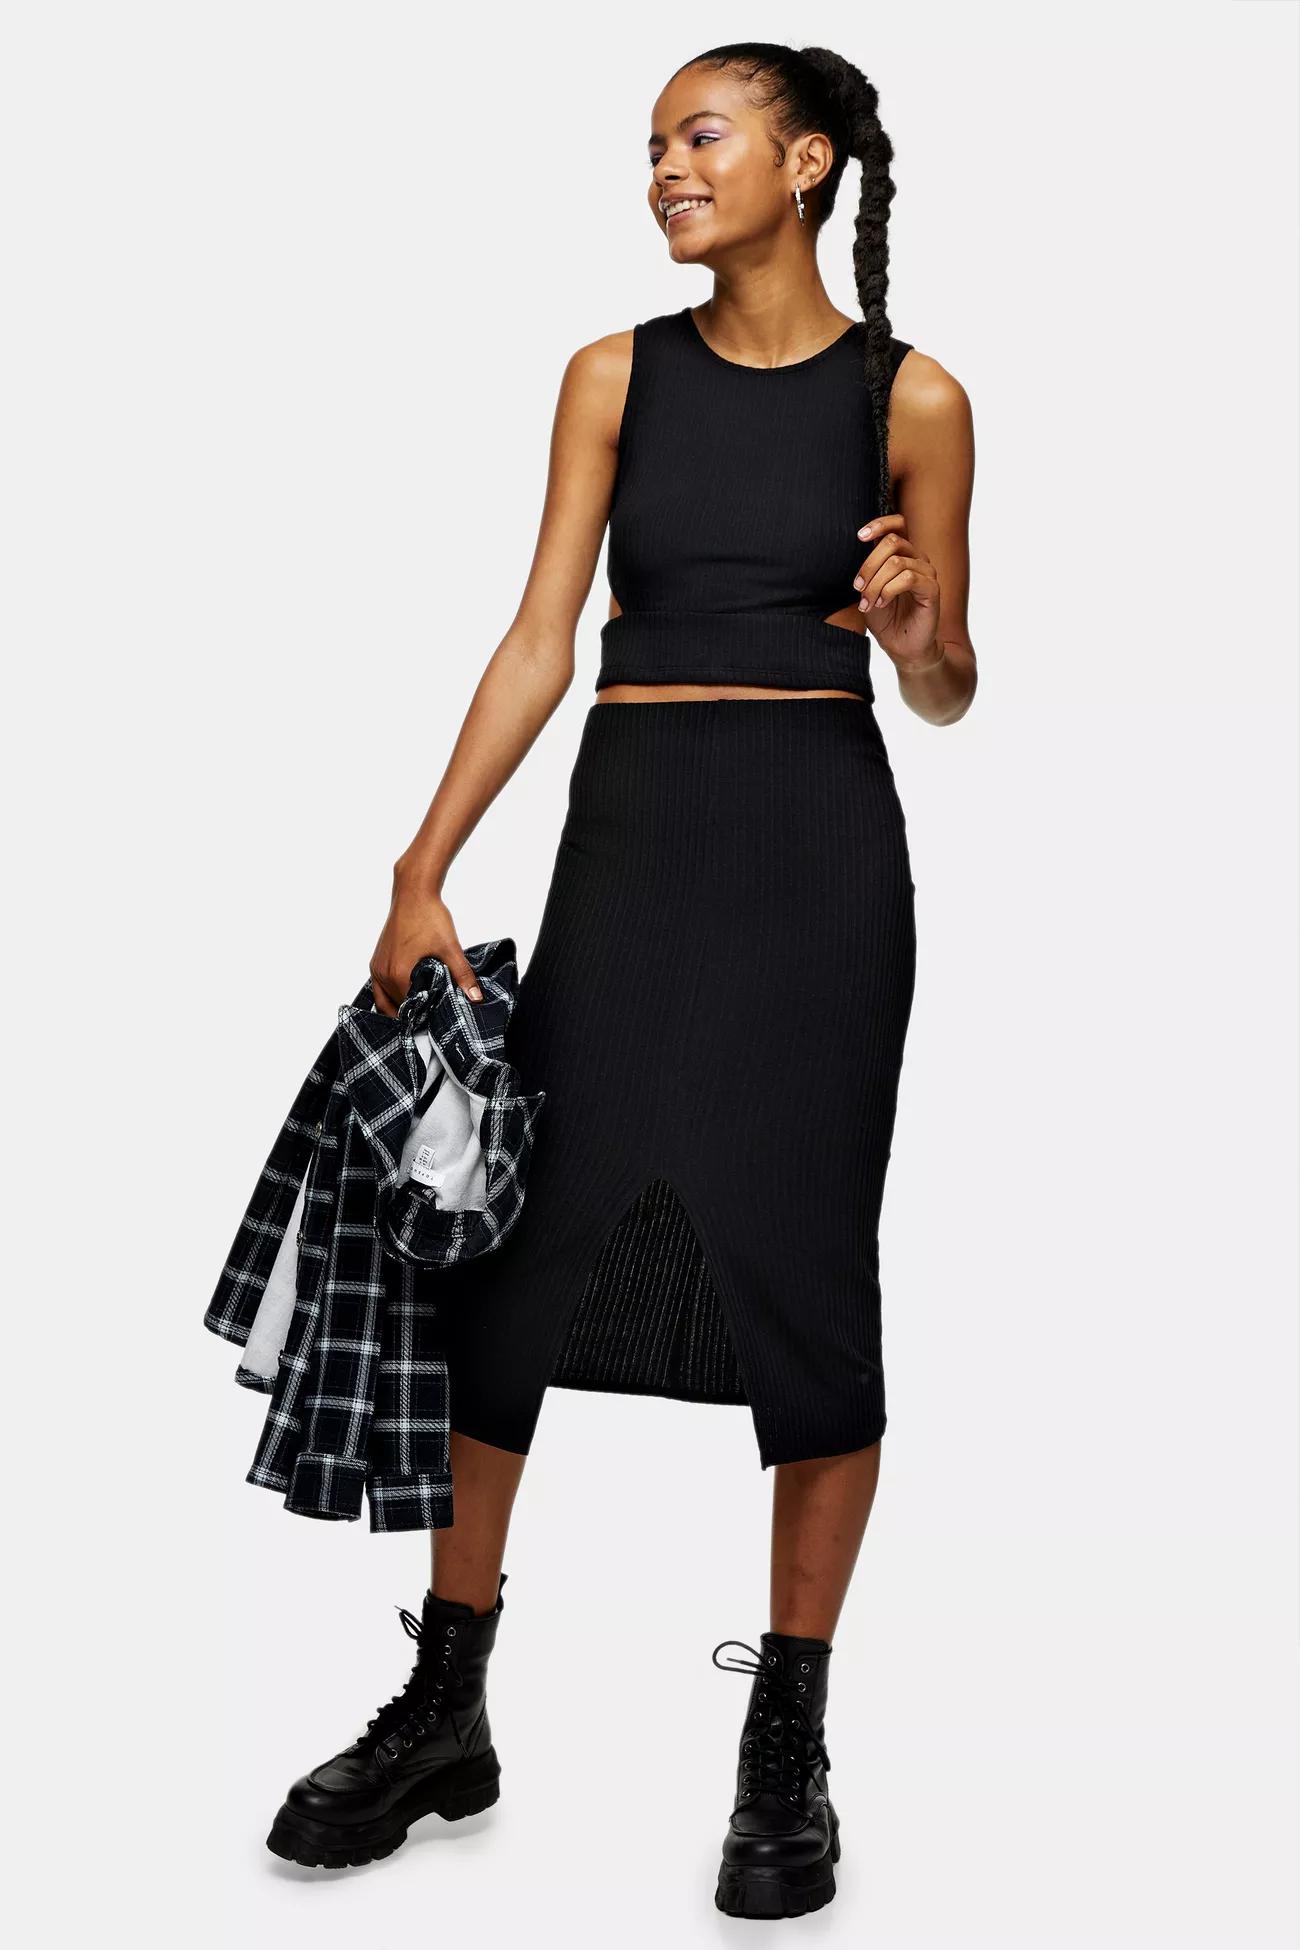 Classic Collection of Black Denim Skirt - Womens Intimates Fashion